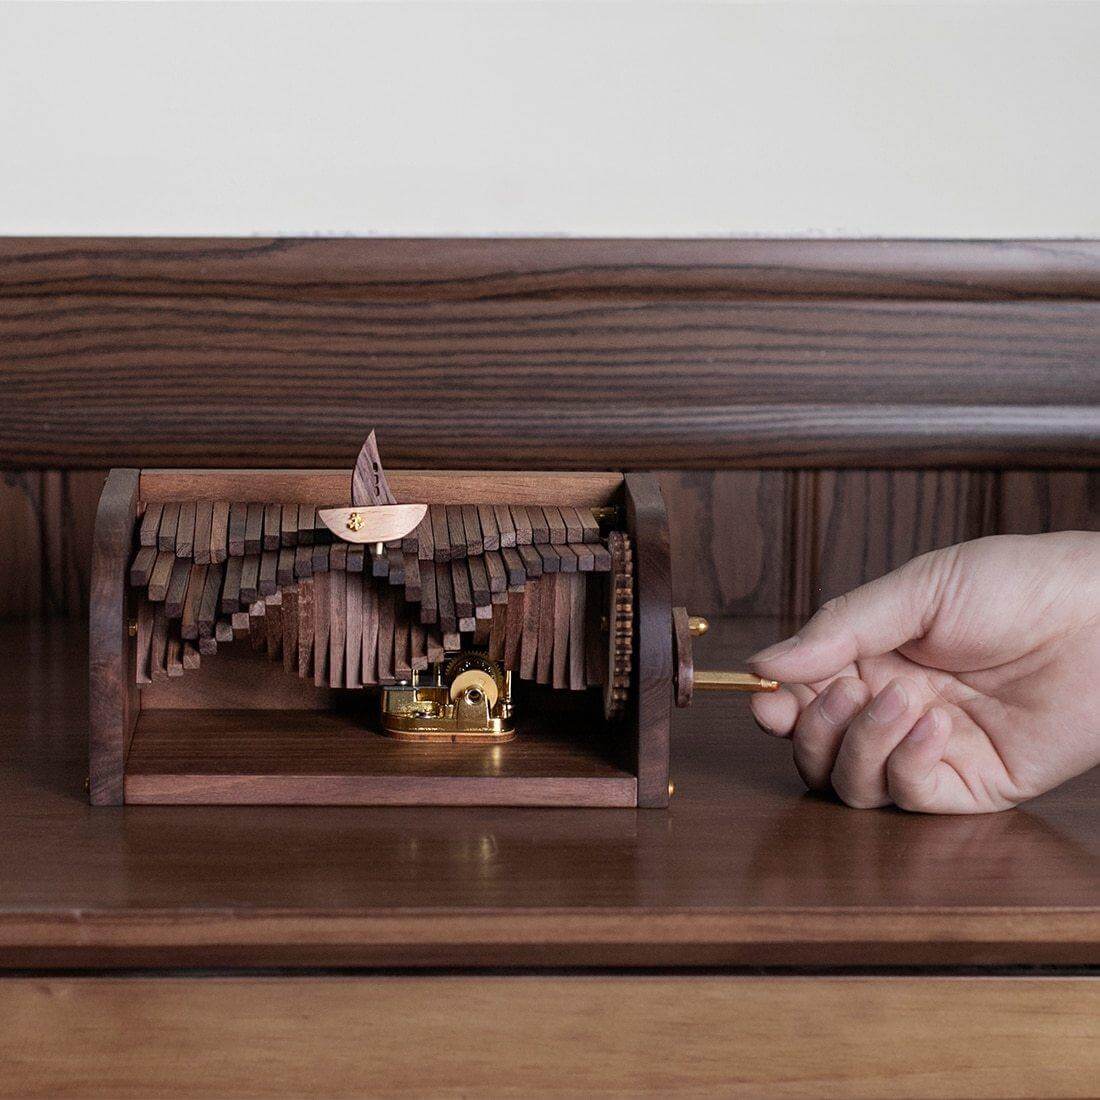 DIY Wooden Puzzle Model Music Box Kit